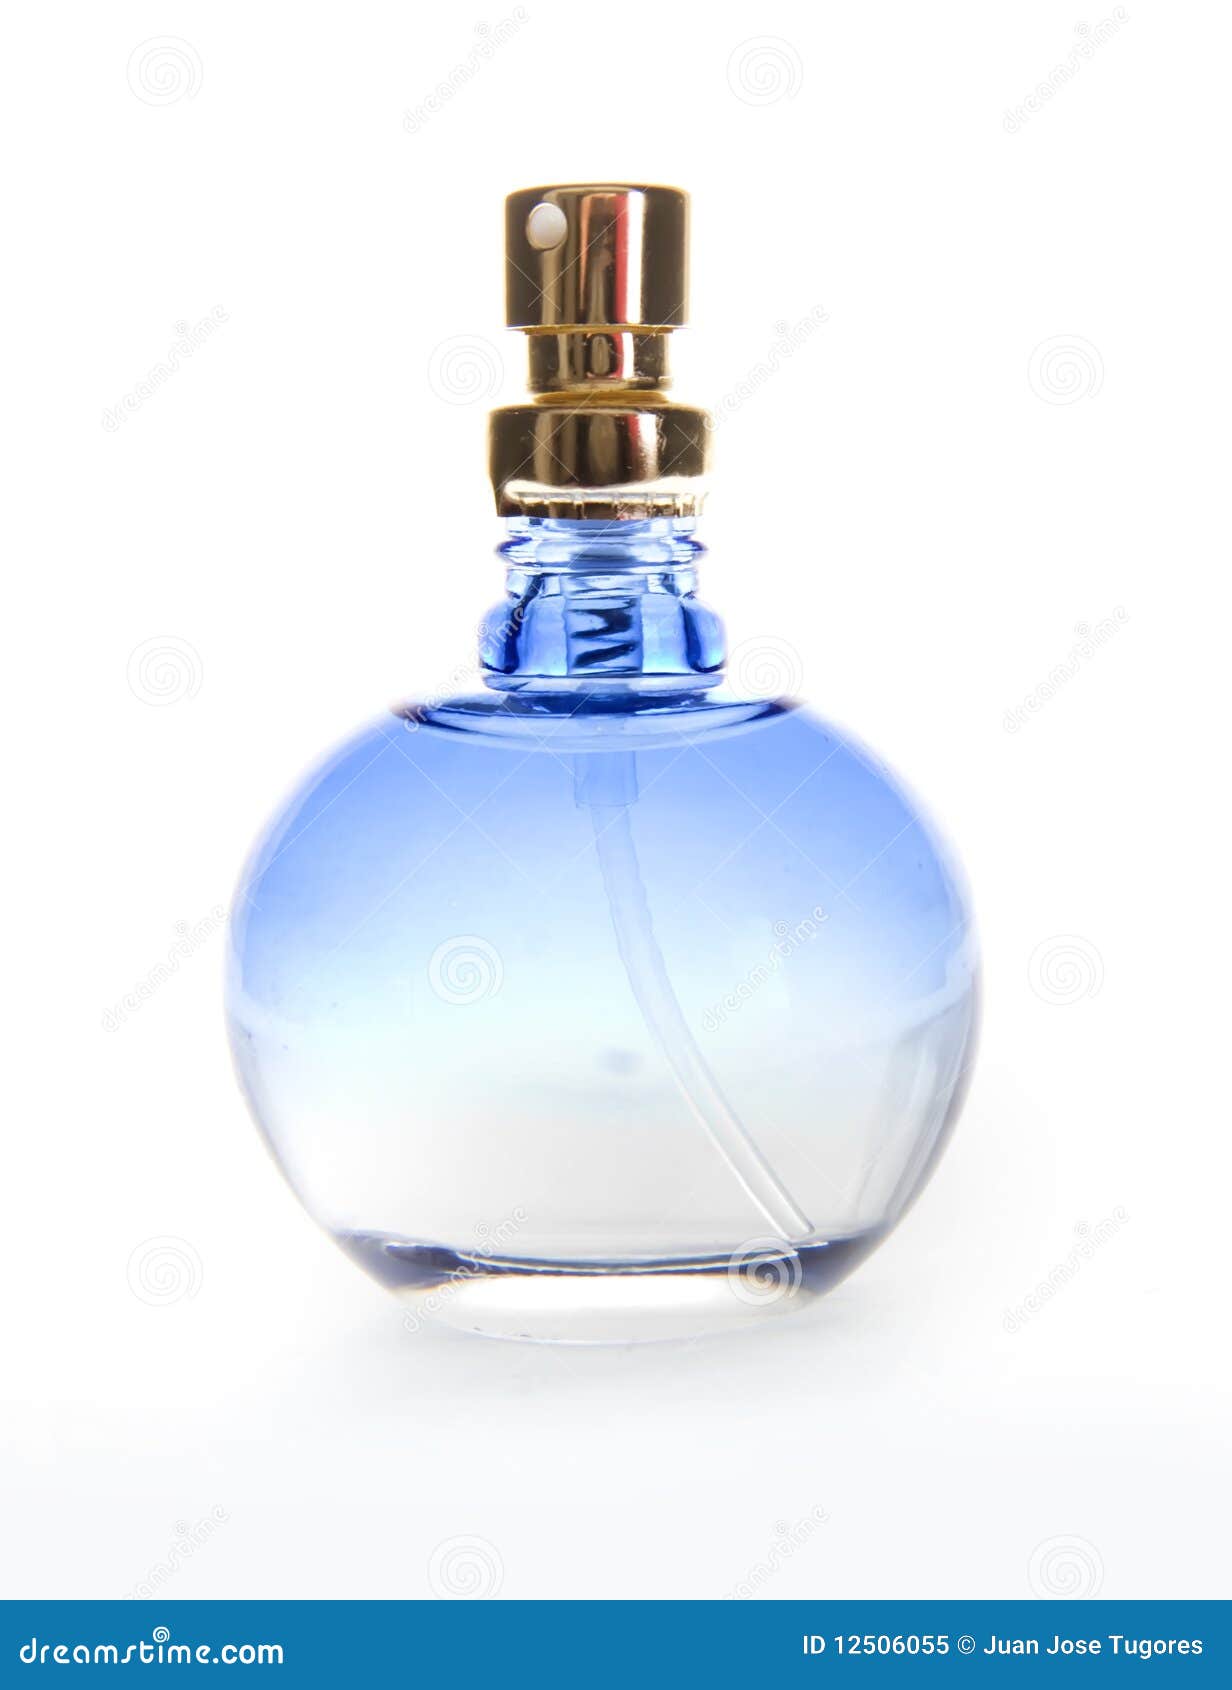 A blue perfume bottle, isolated on white background.